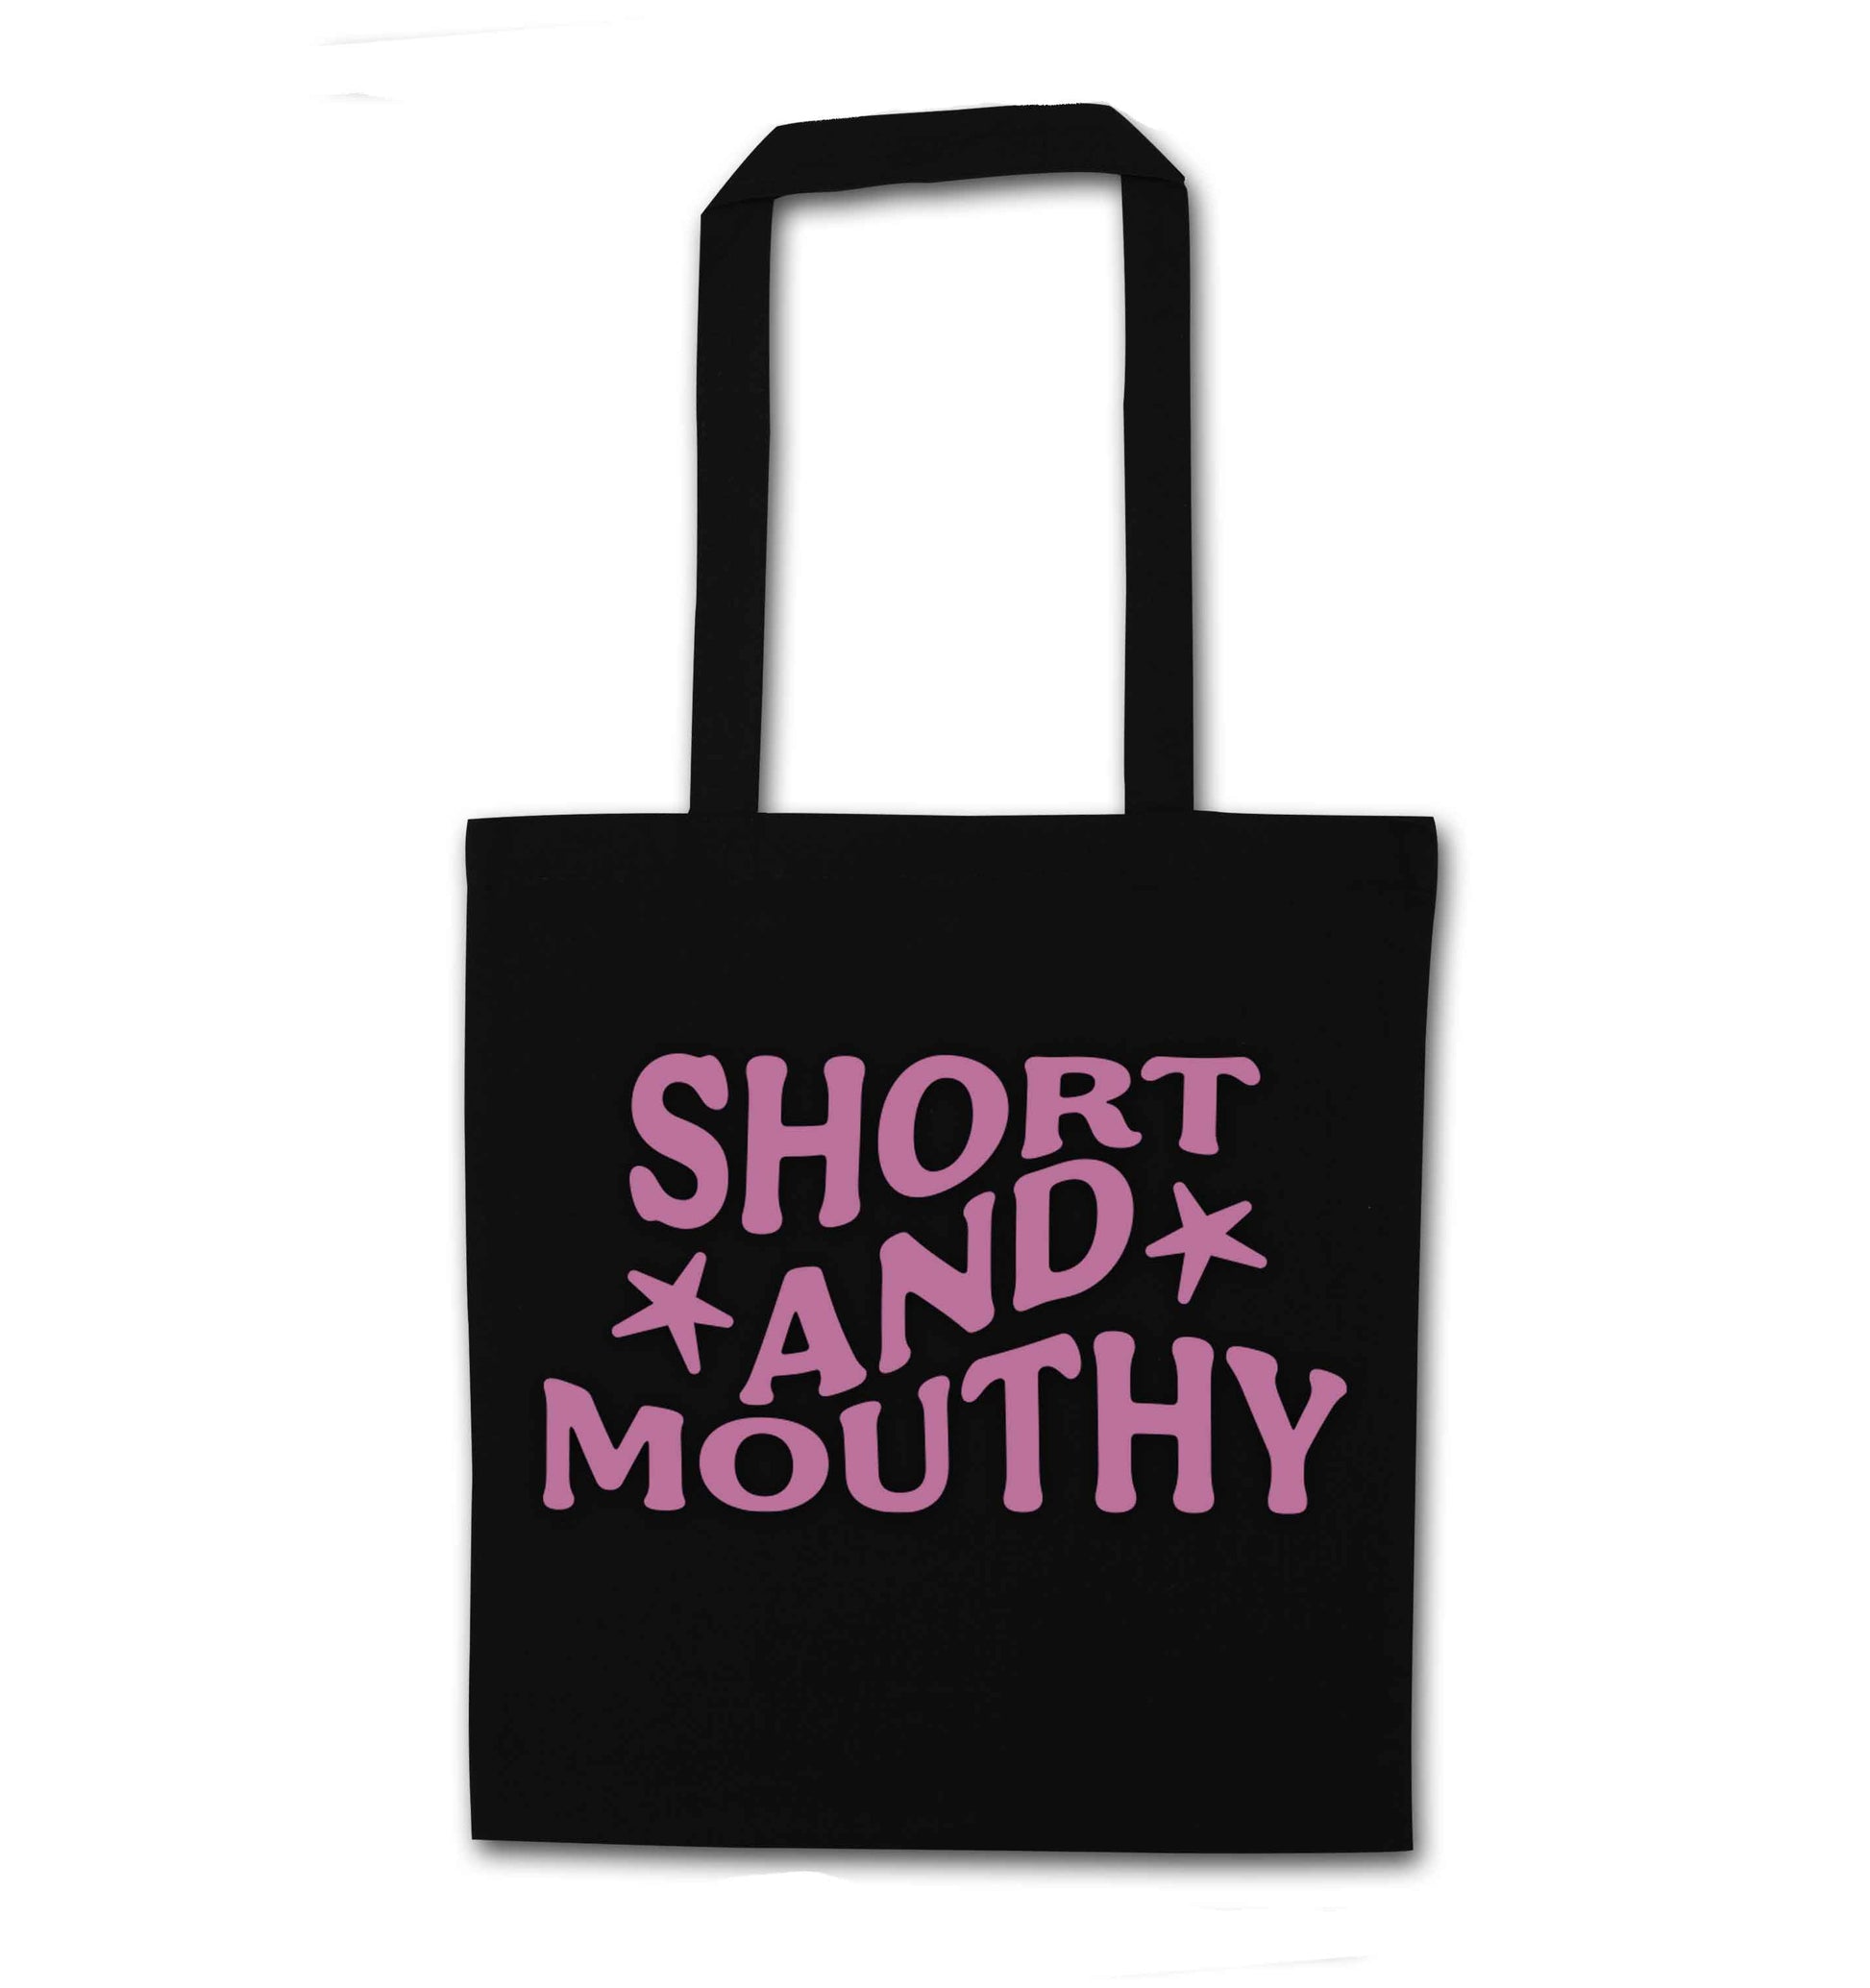 Short and mouthy black tote bag